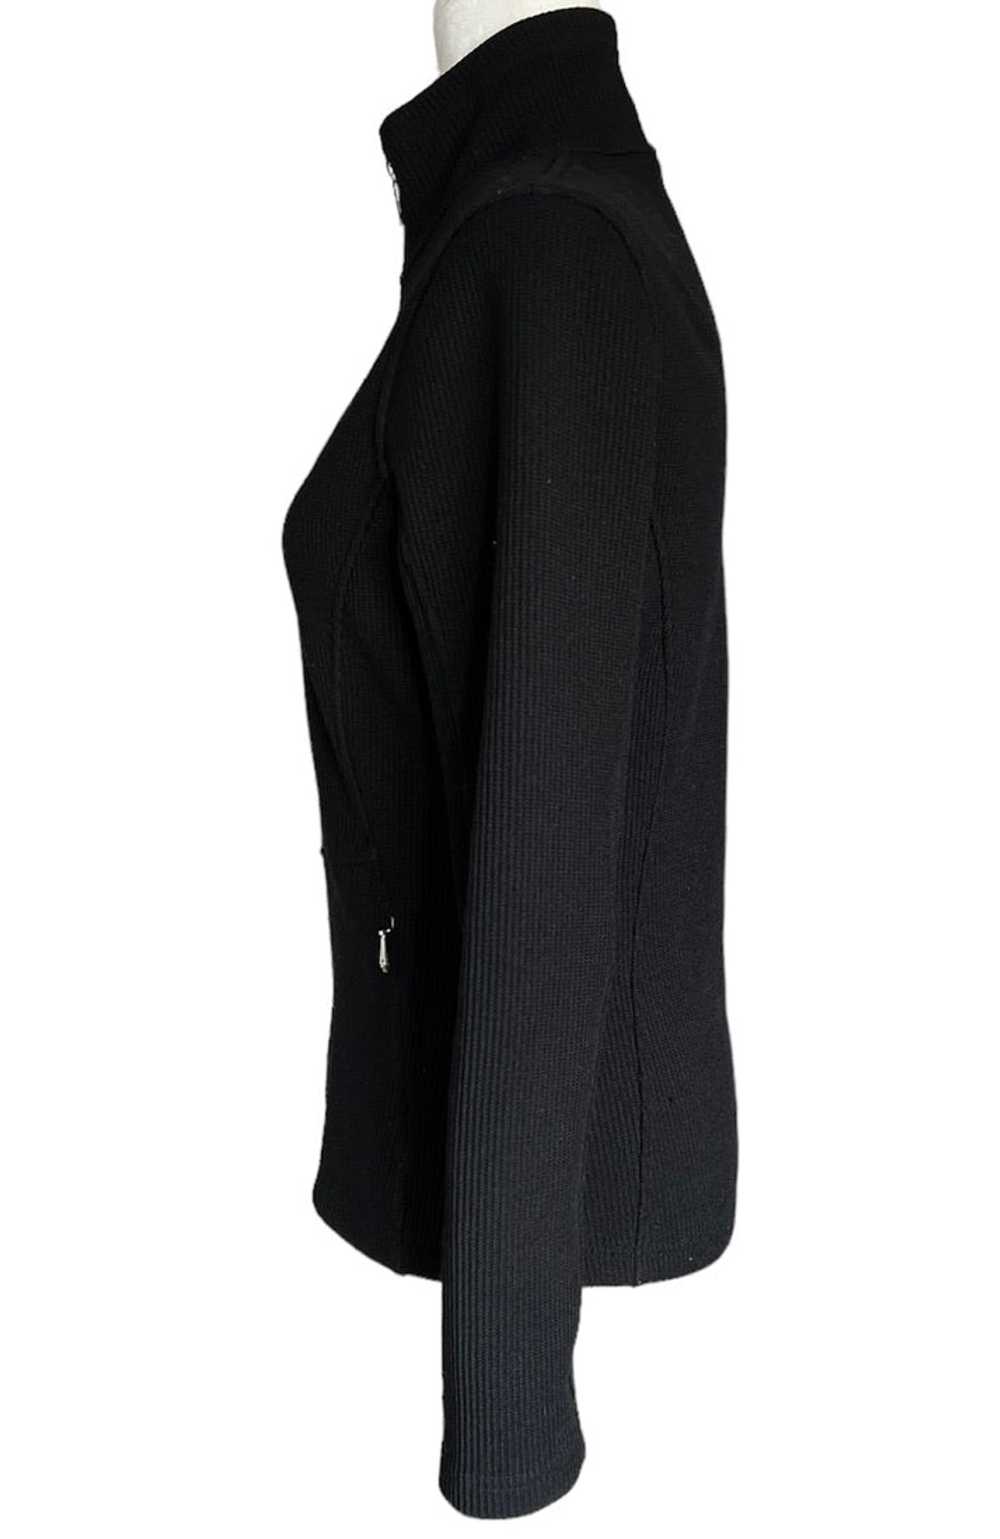 Spyder Black Zipper Core Sweater Jacket, M - image 3